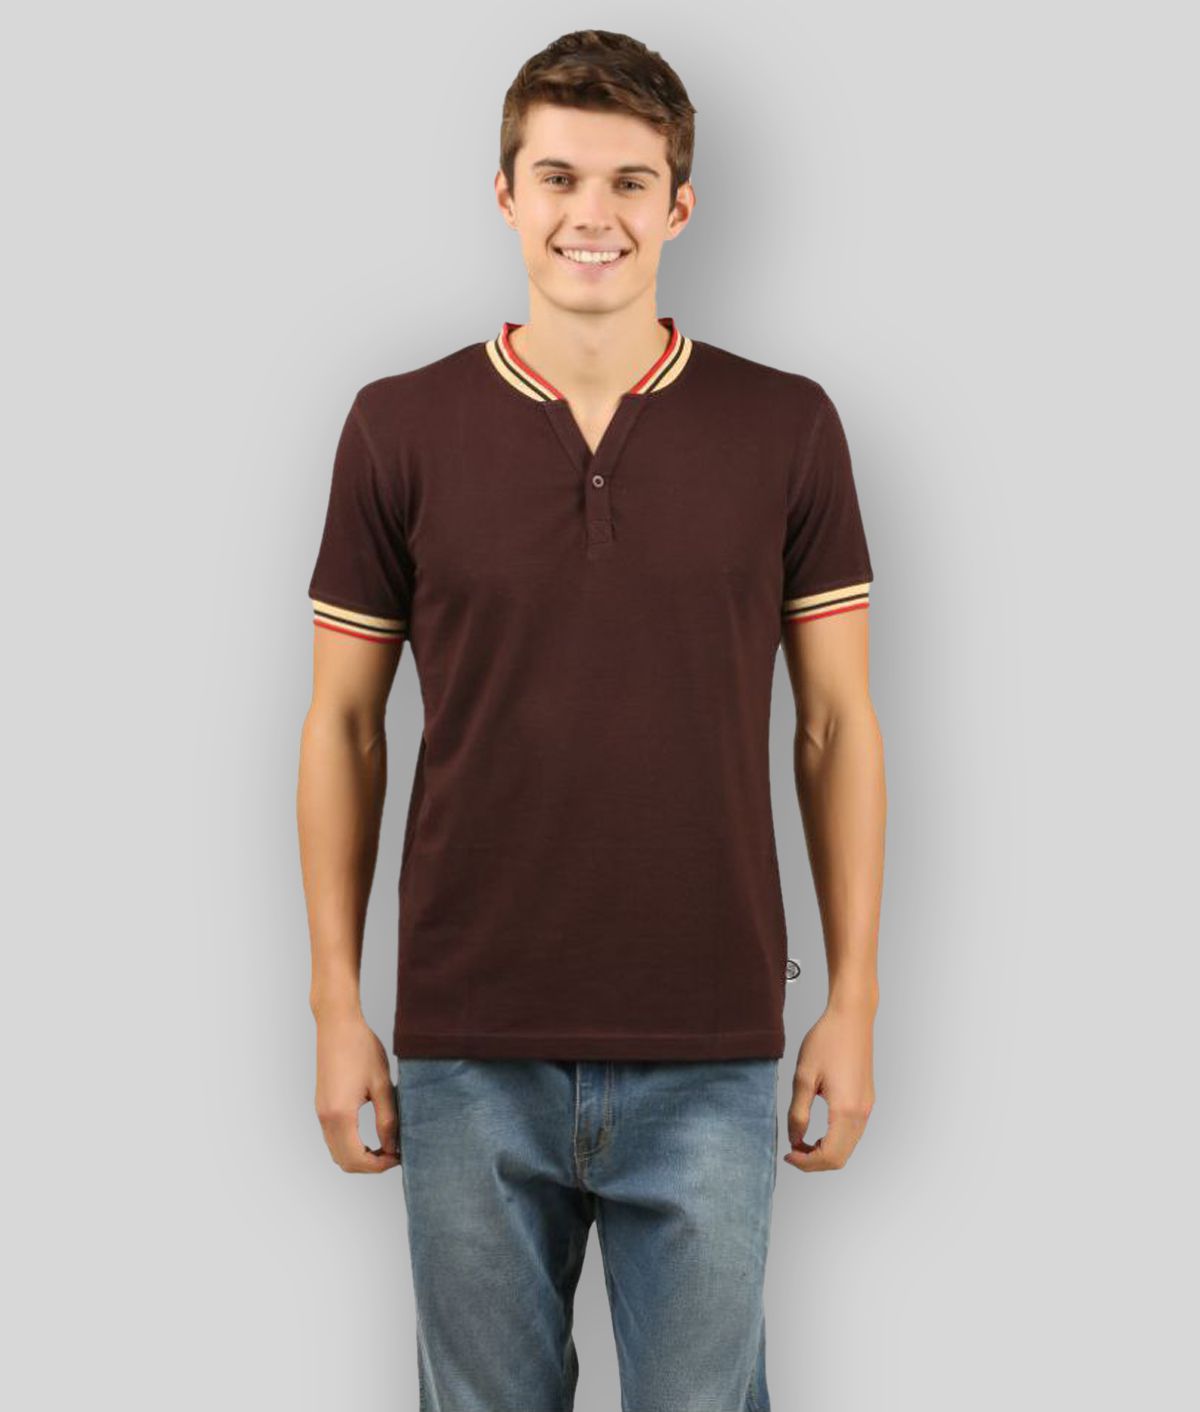 Zebu - Brown Cotton Regular Fit Men's T-Shirt ( Pack of 1 )